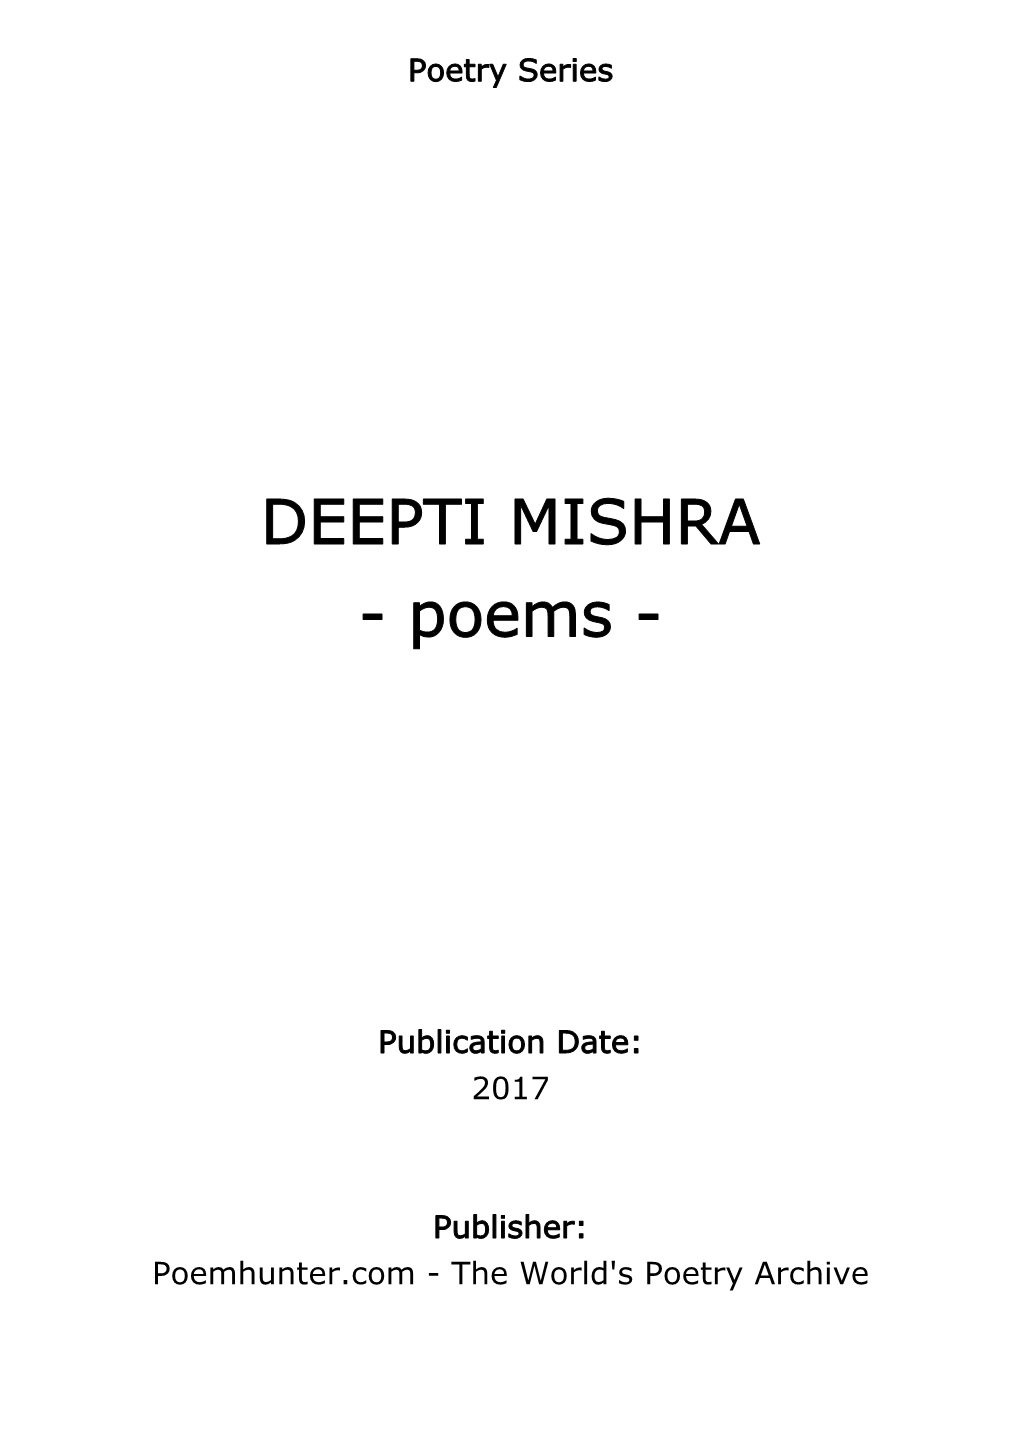 DEEPTI MISHRA - Poems